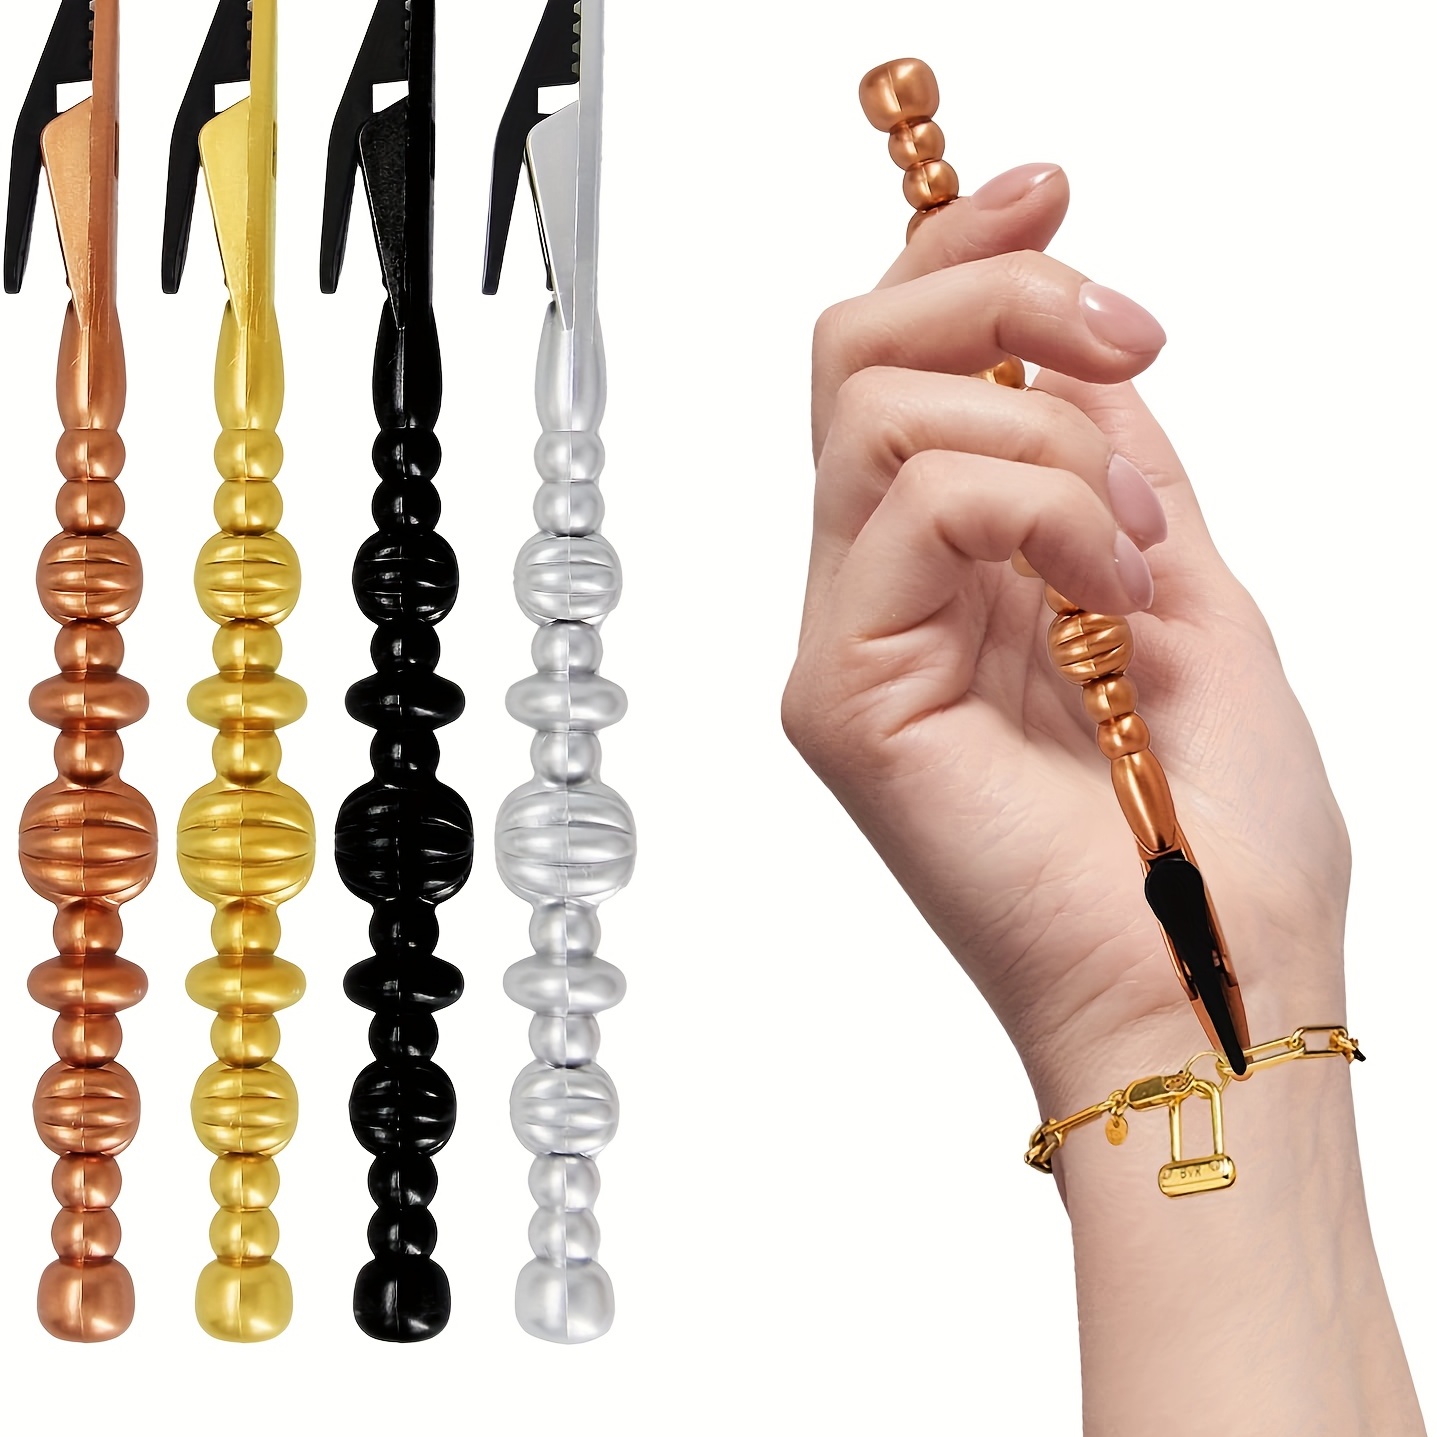 Bracelet Helper Tool Jewelry Helpers Bangle Bracelet - Temu